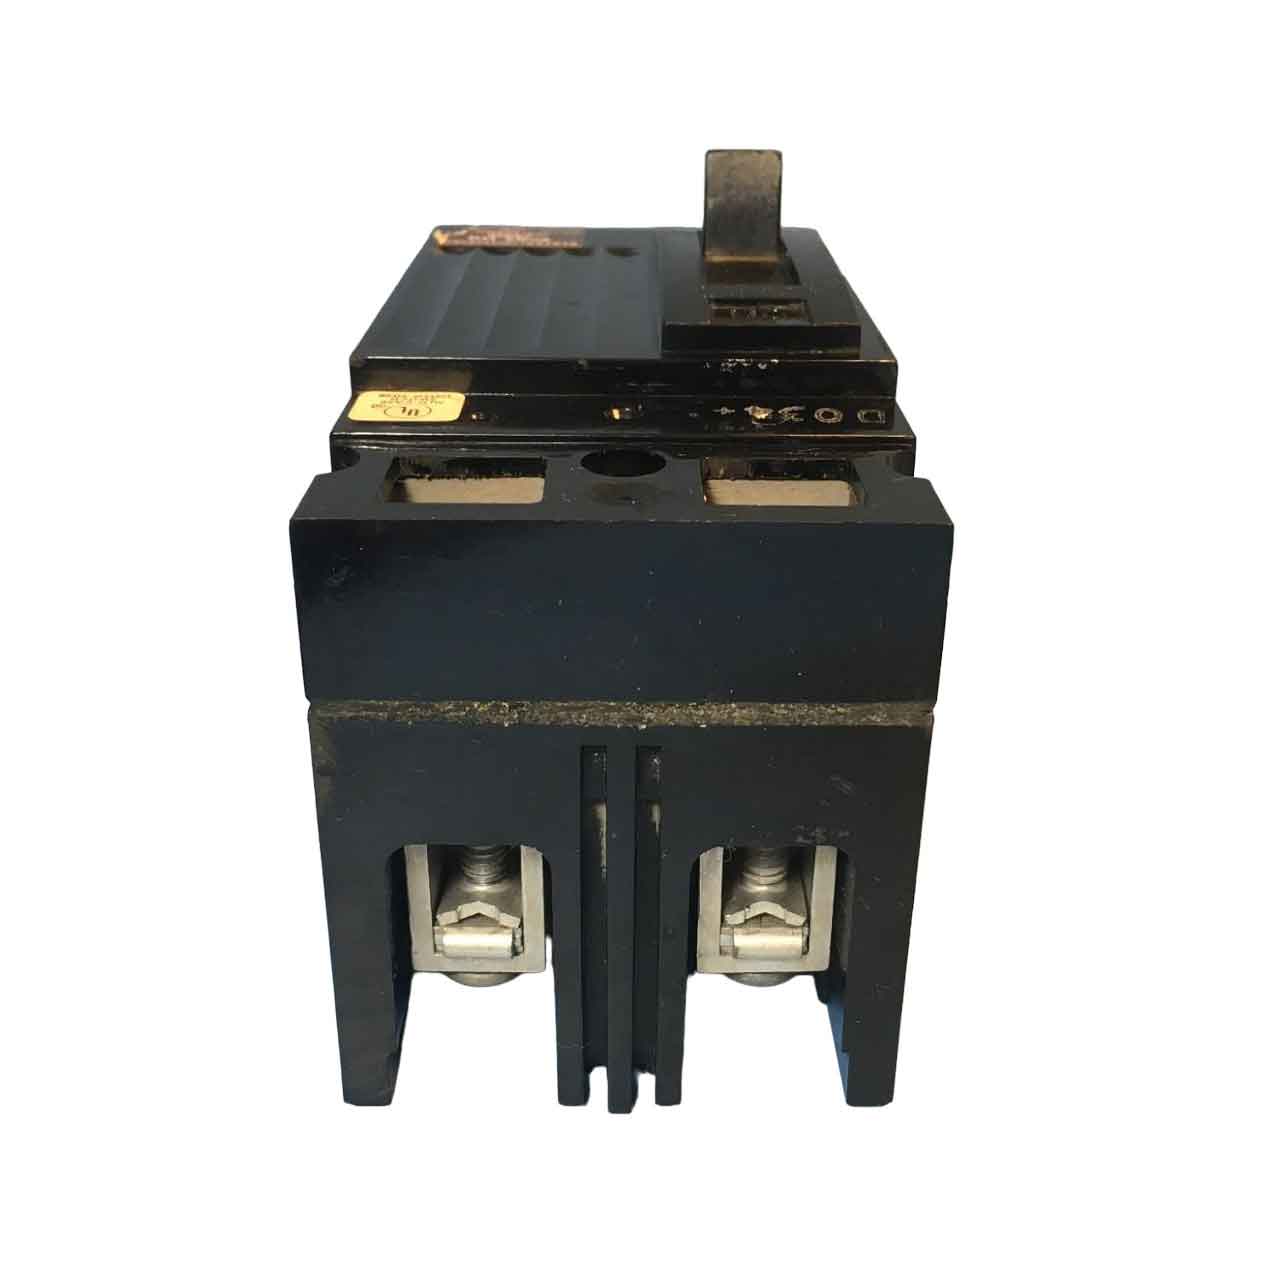 TEB122Y100 - General Electrics - Molded Case Circuit Breakers